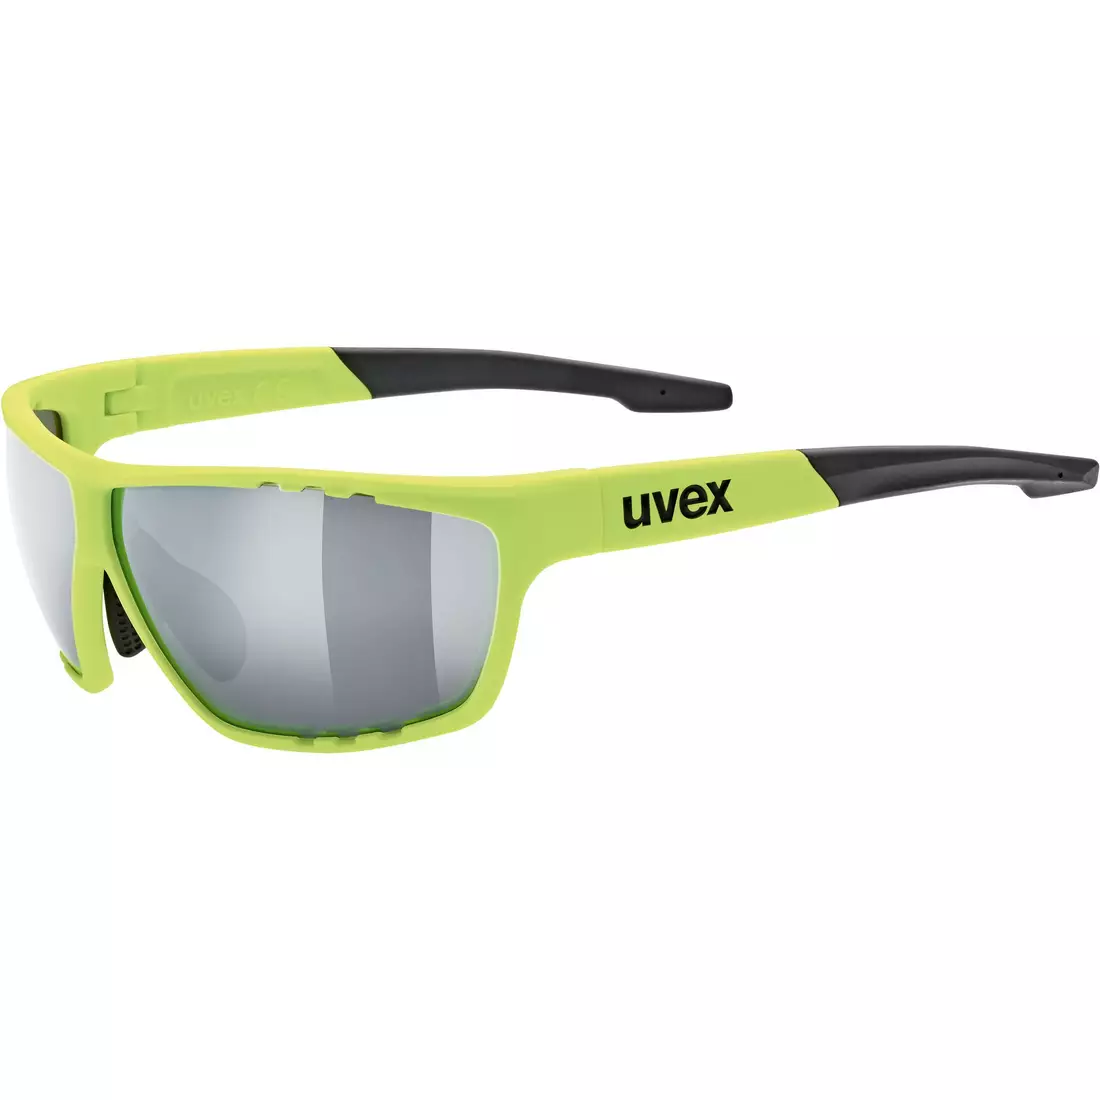 Bicycle / Sport glasses Uvex sportstyle 706 53/2/006/6616/UNI